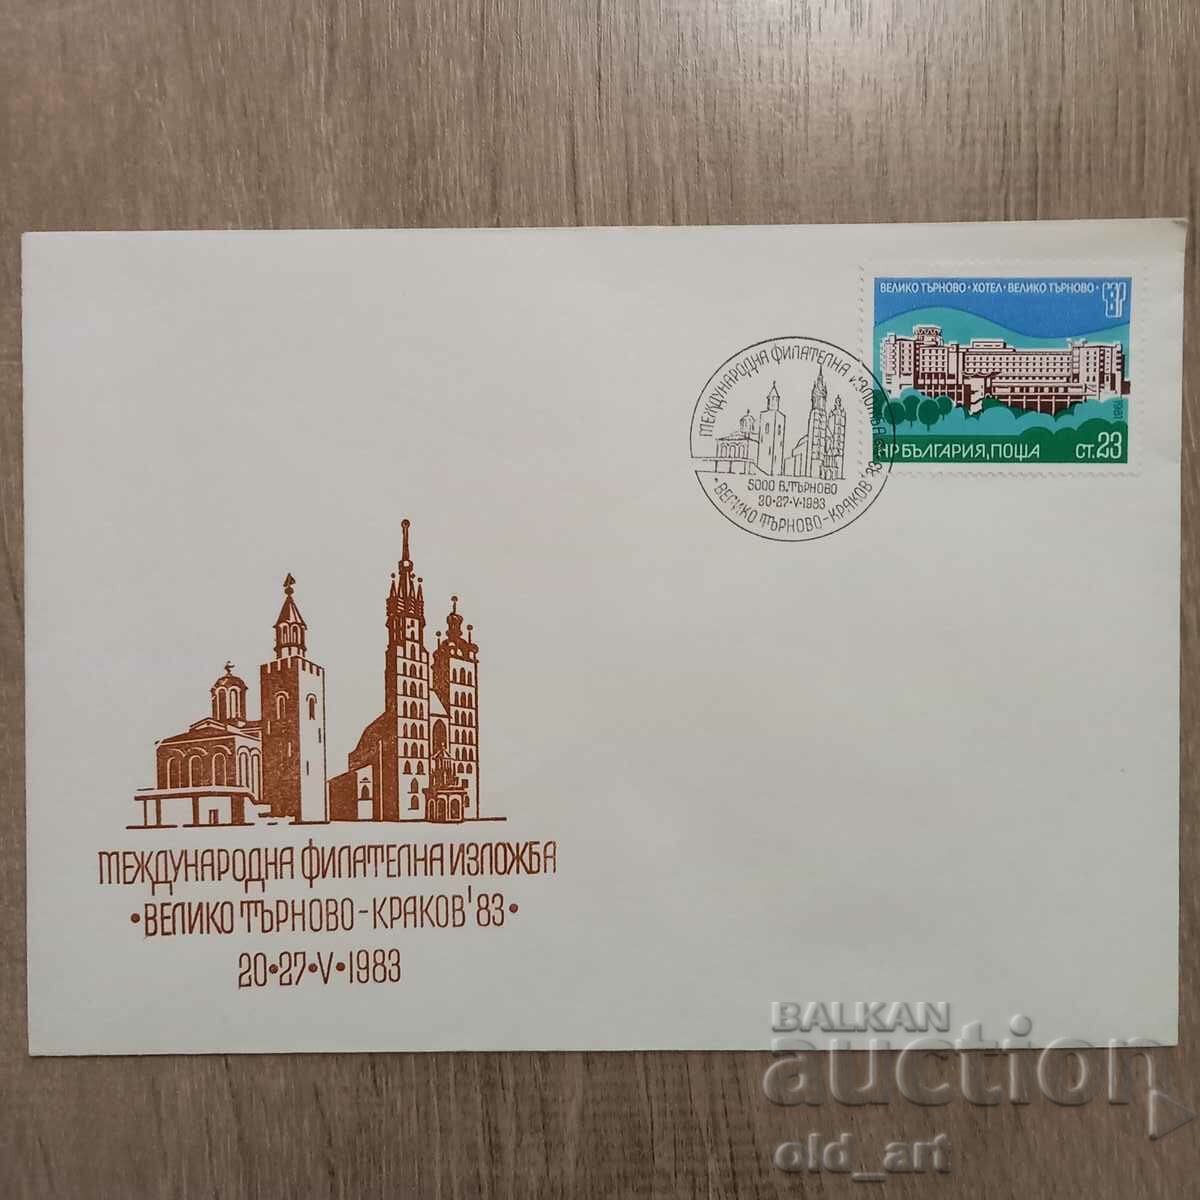 Postal envelope - Int. filet. exhibition V. Tarnovo - Krakow 83